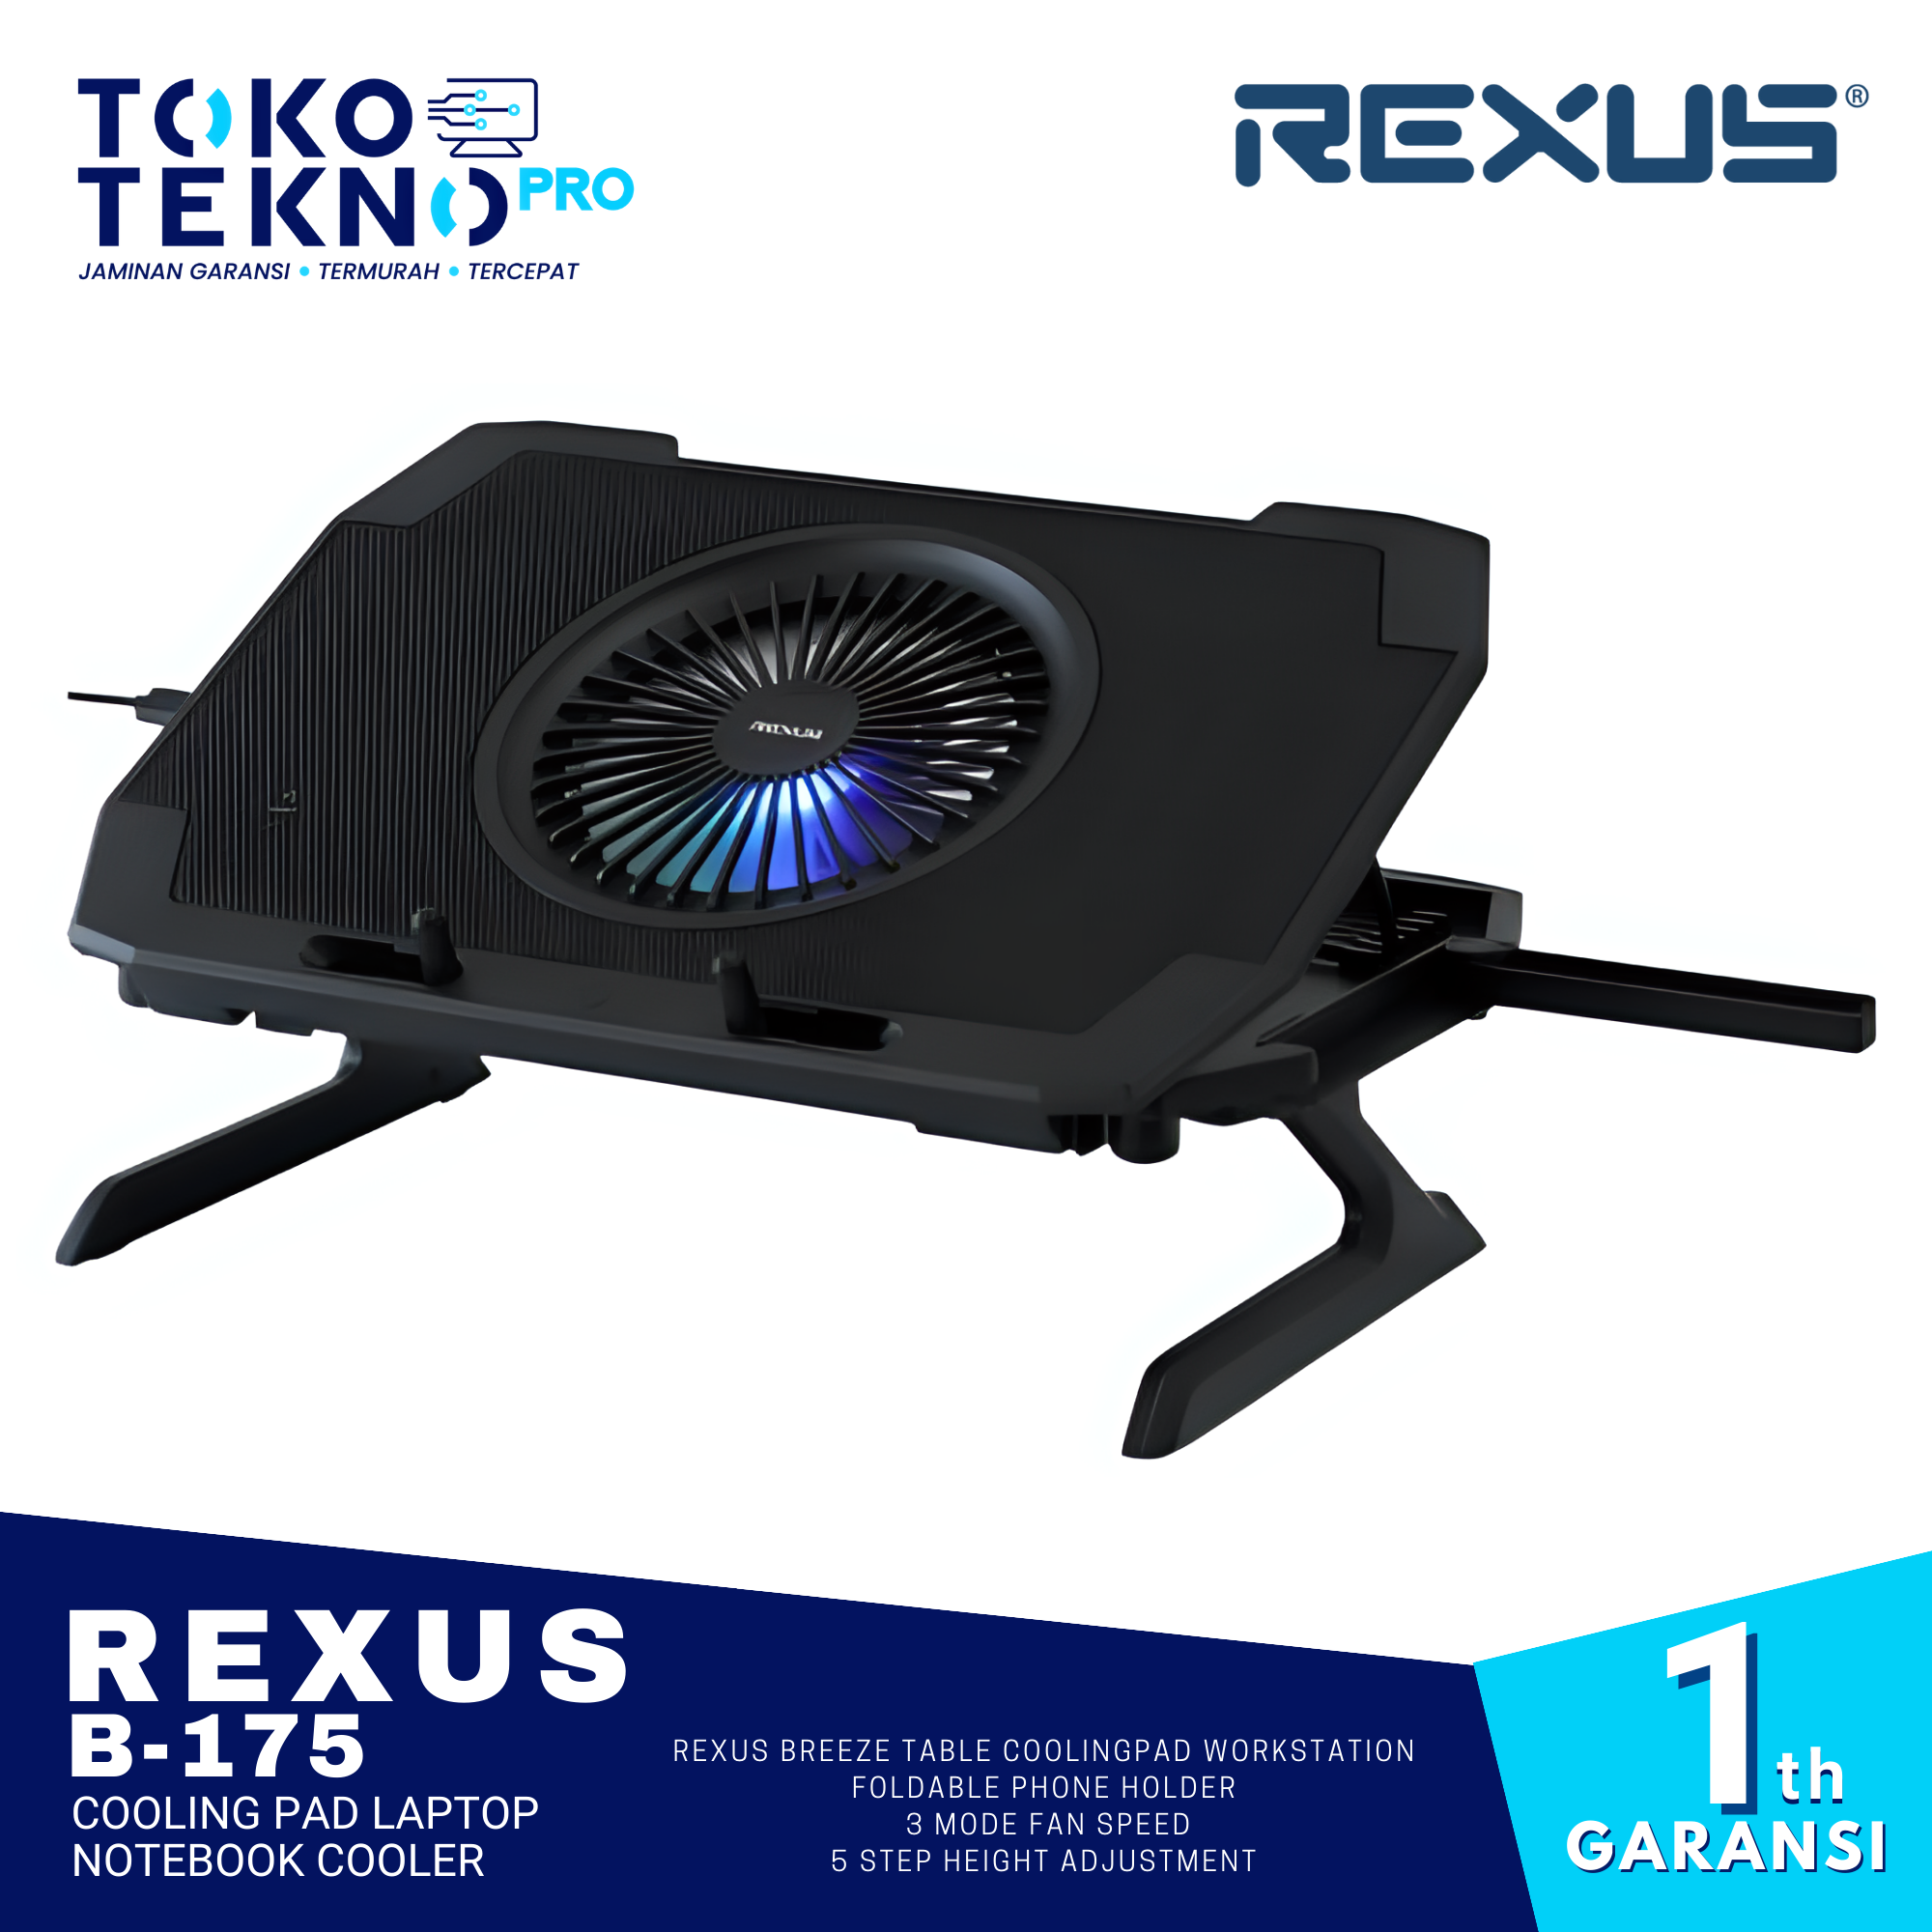 Rexus B175 / B-175 Cooling Pad Laptop Notebook Cooler